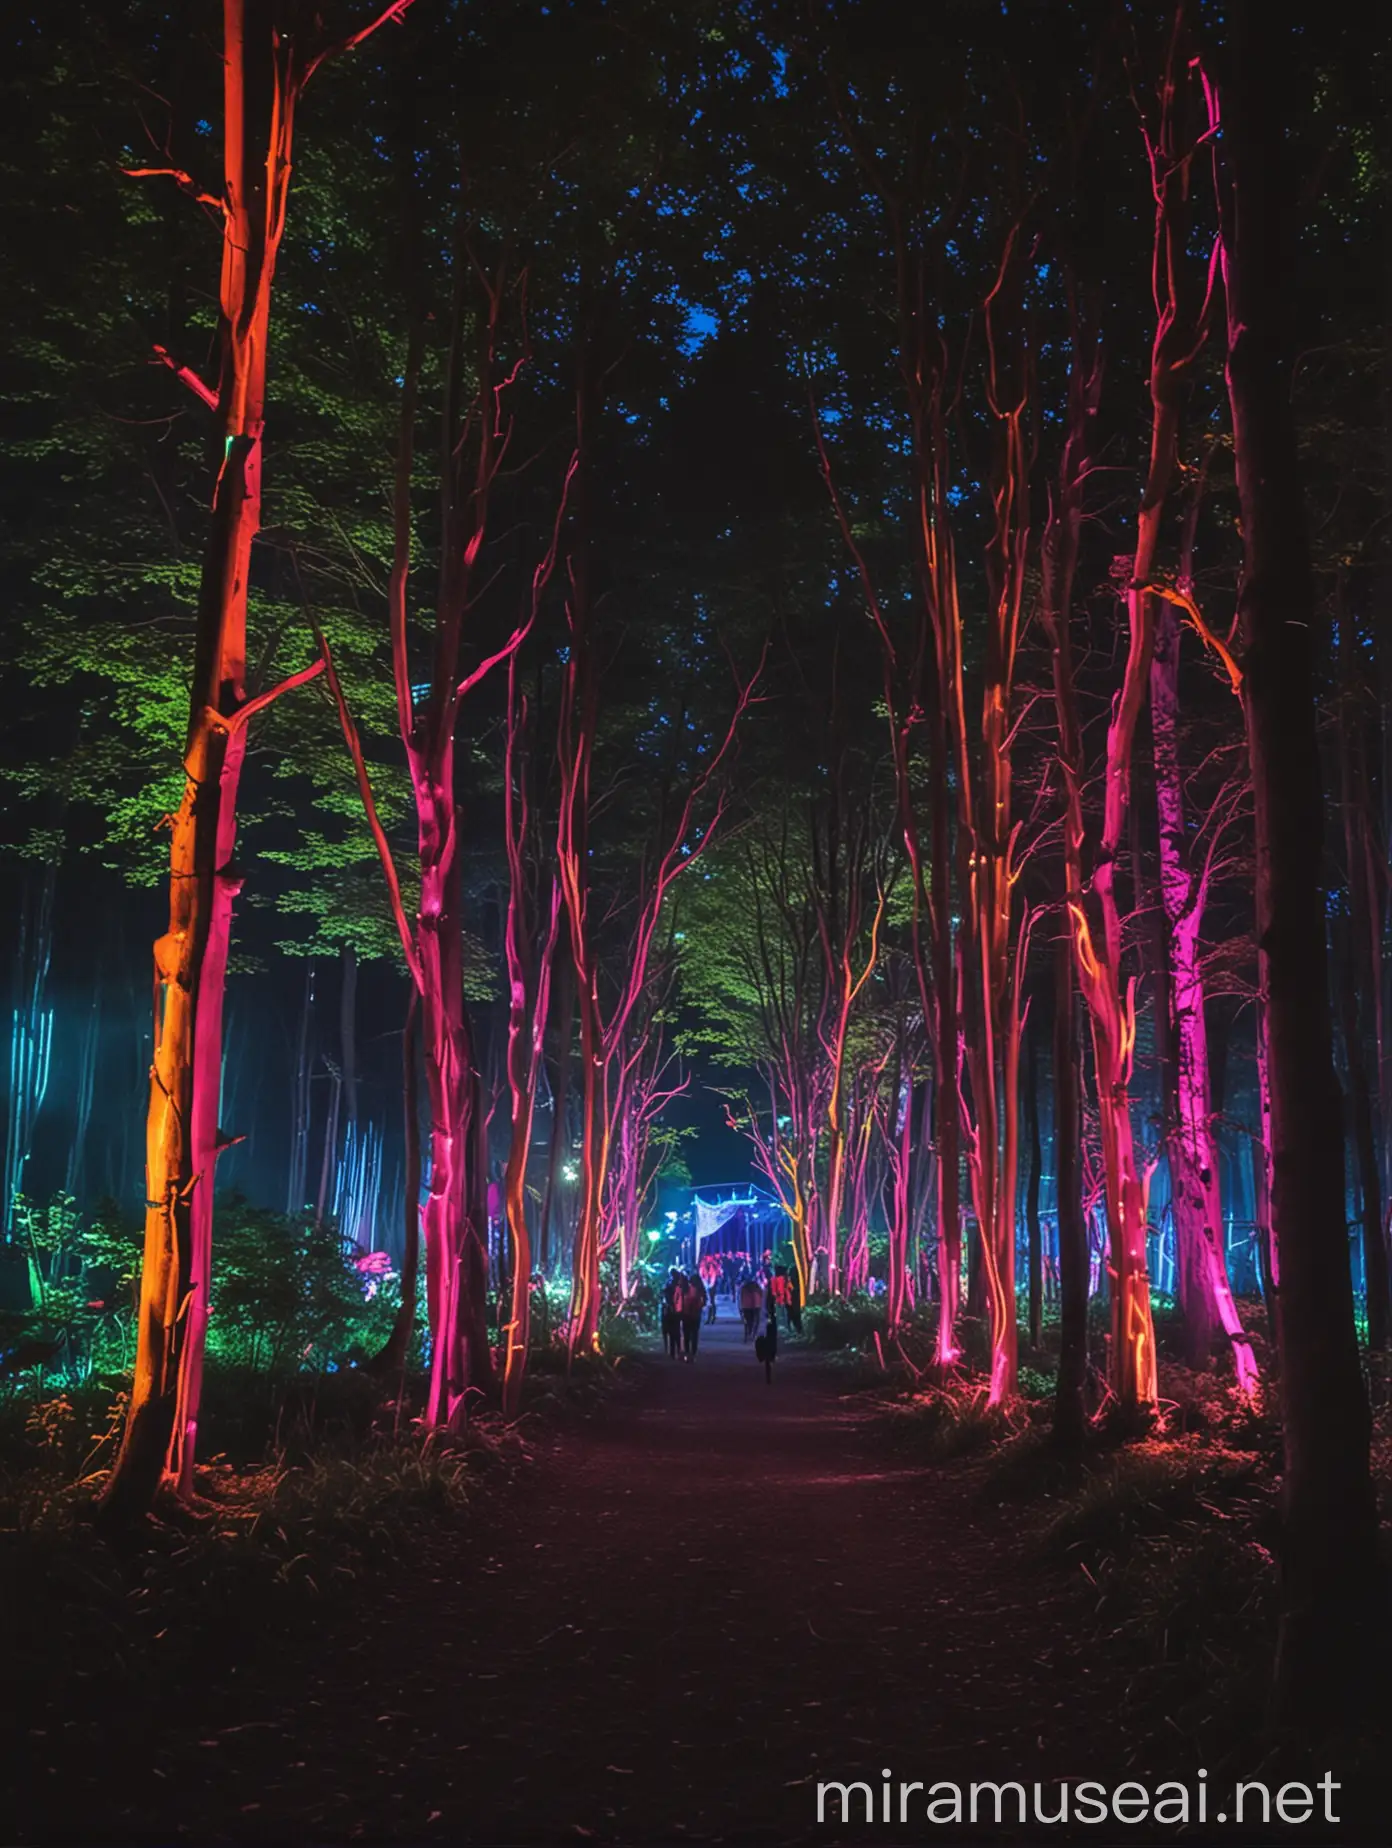 Neon Night at Waldfest Festival with Illuminated Trees